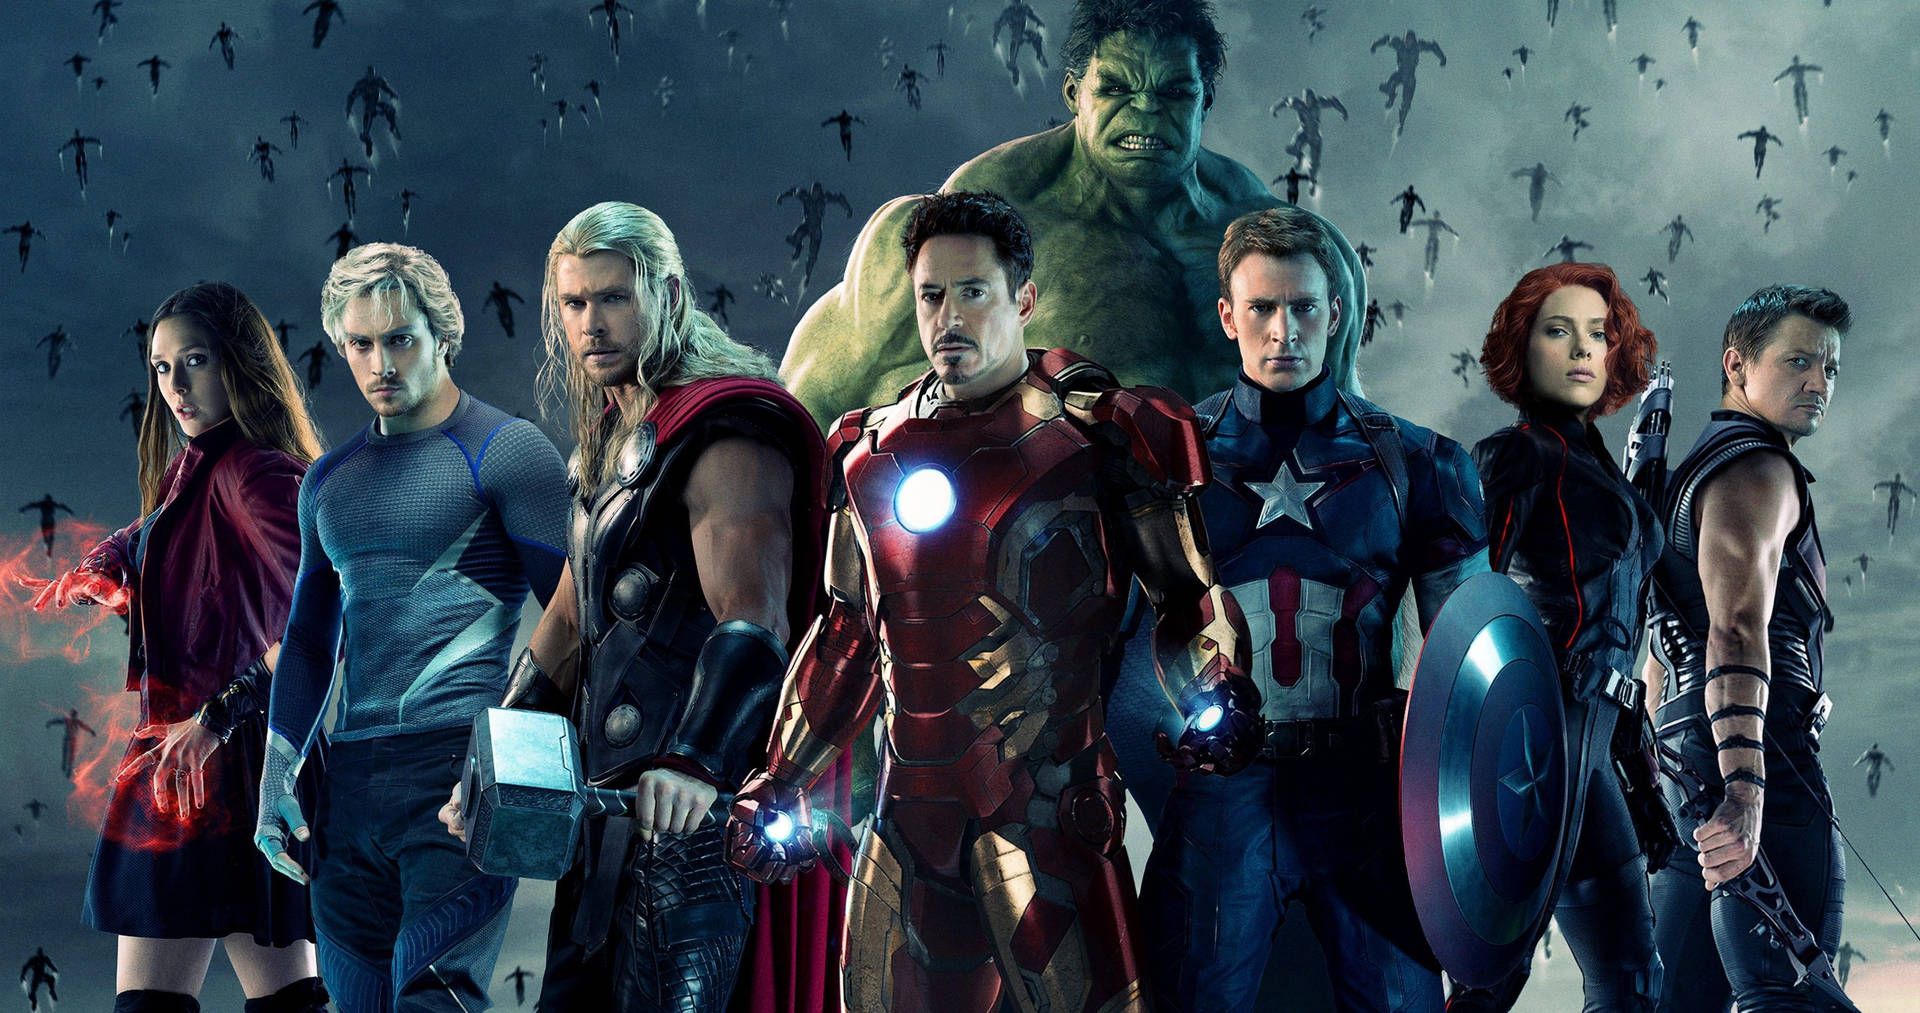 Epic Battle - Avengers Assemble In 4k Wallpaper